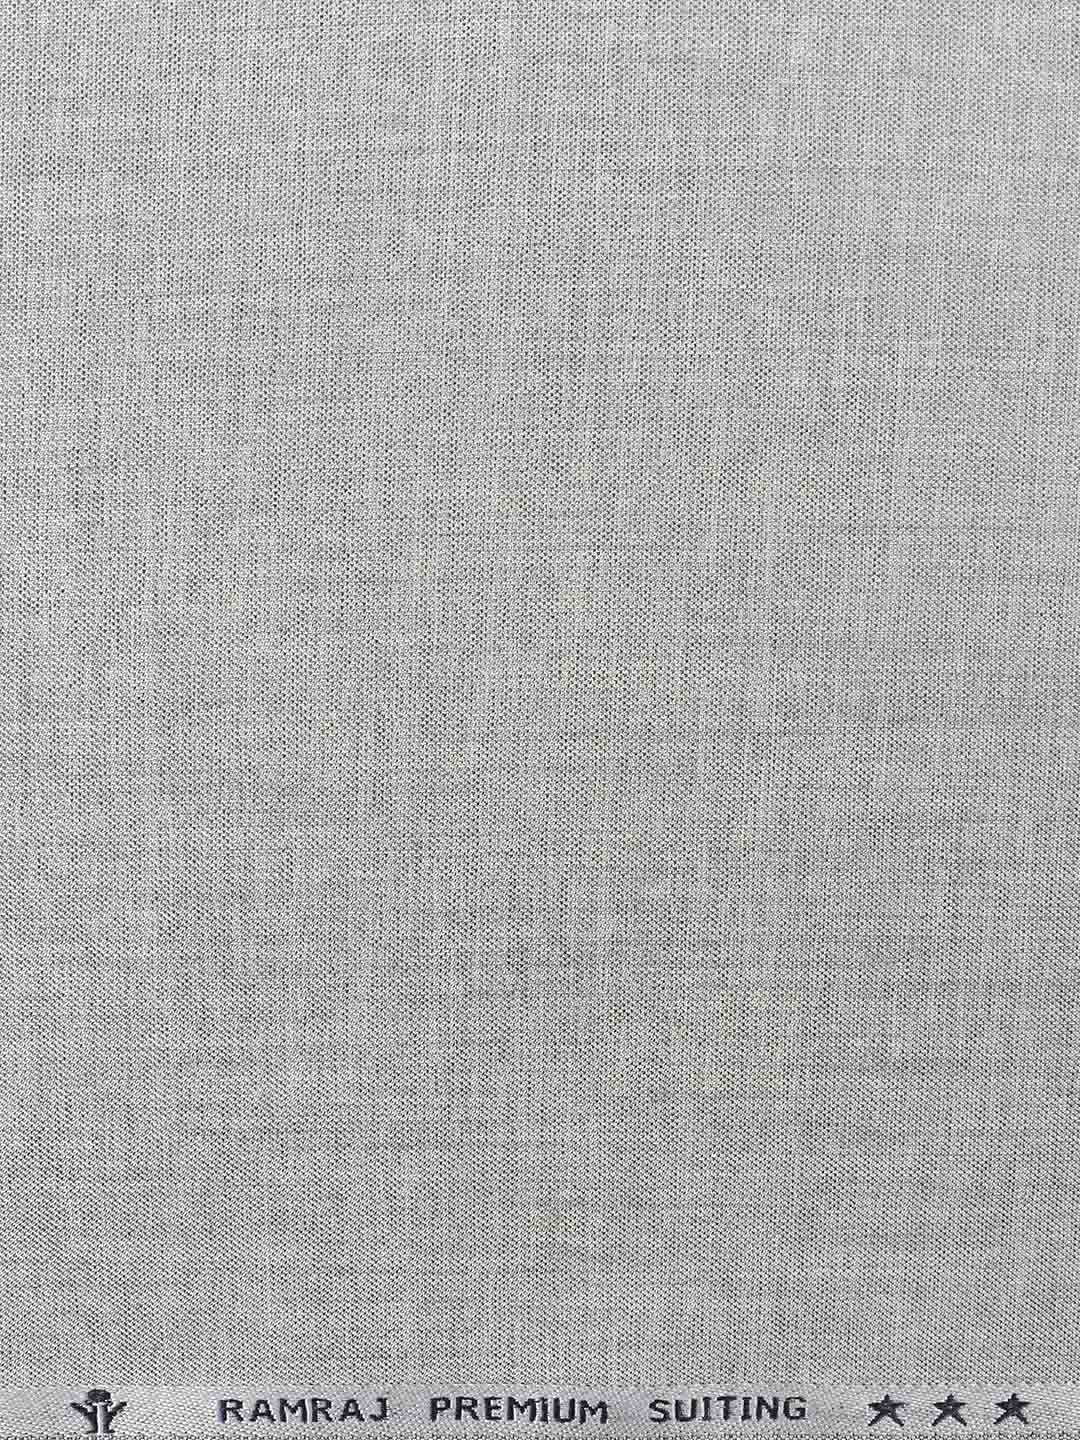 Cotton Grey Premium Suiting Fabric-Golden Days